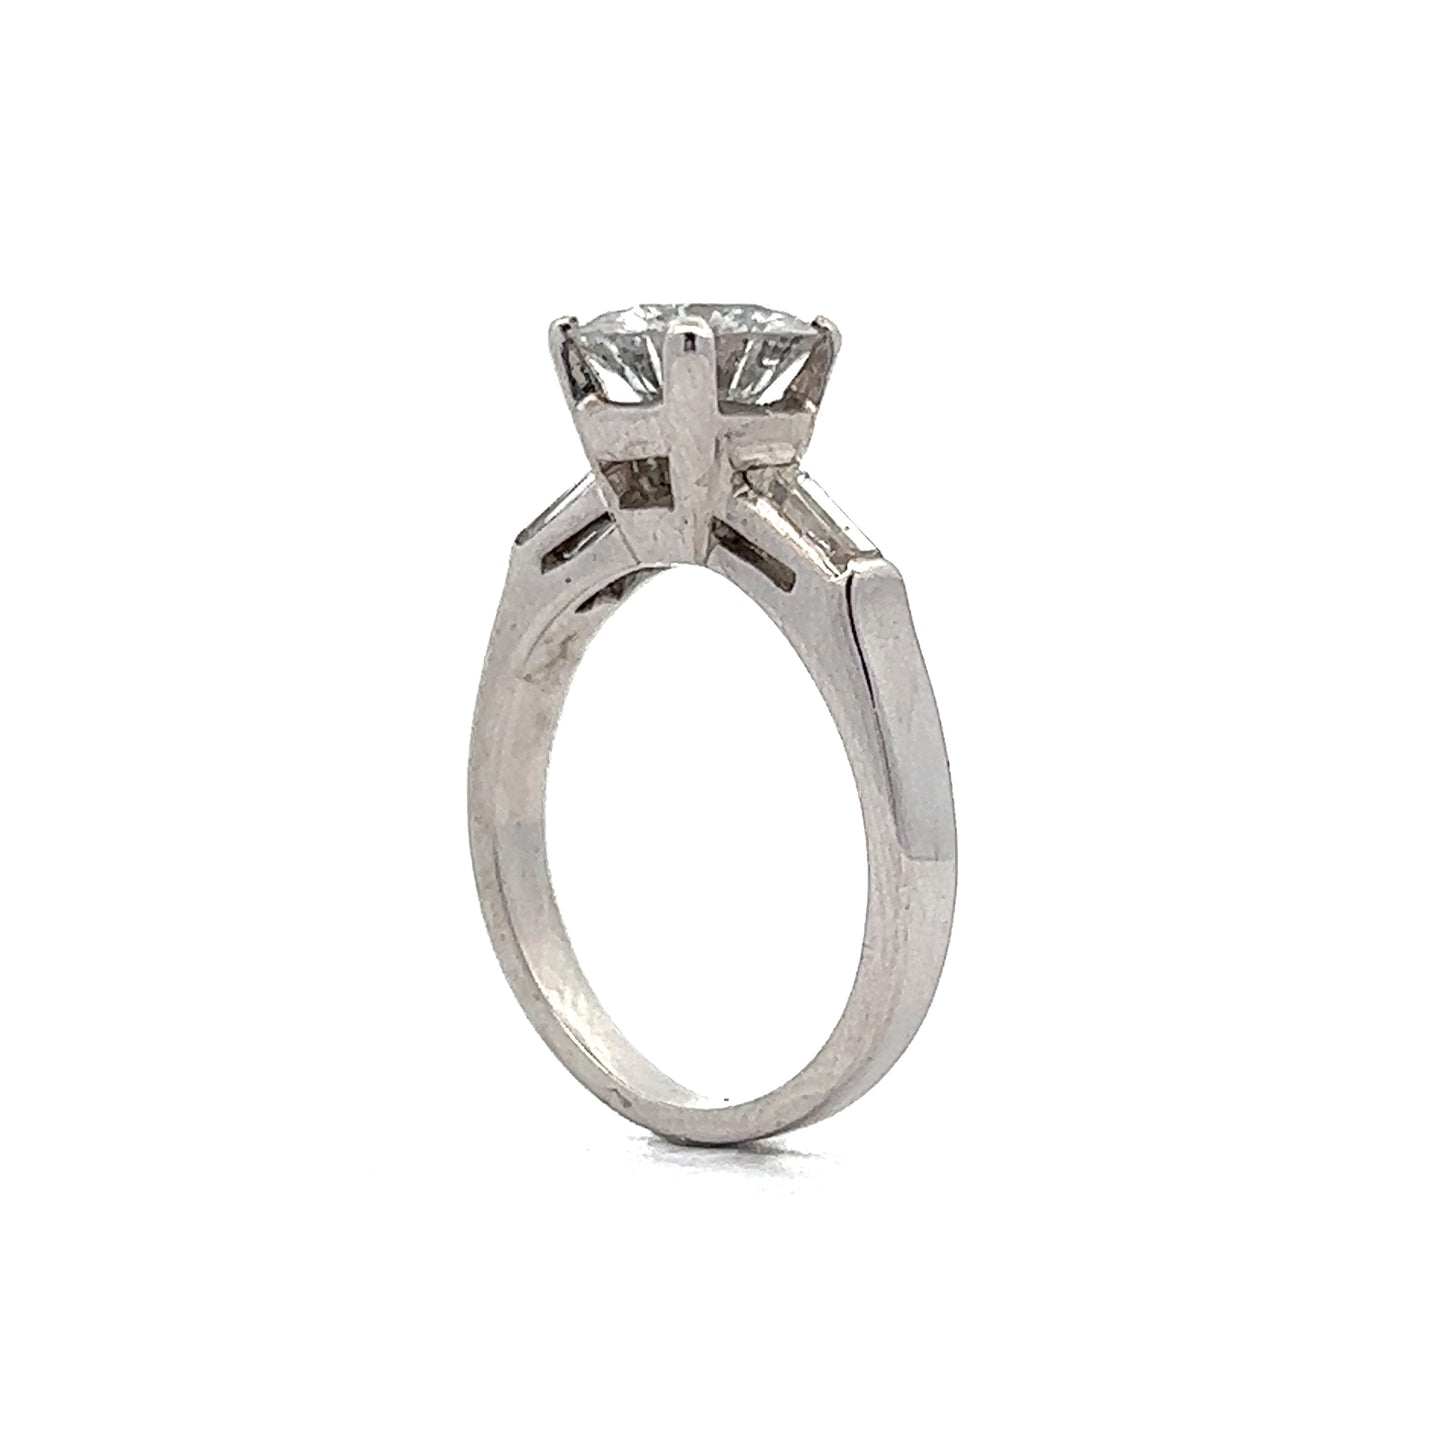 1.60 Round Brilliant Diamond Engagement Ring in 14k White Gold